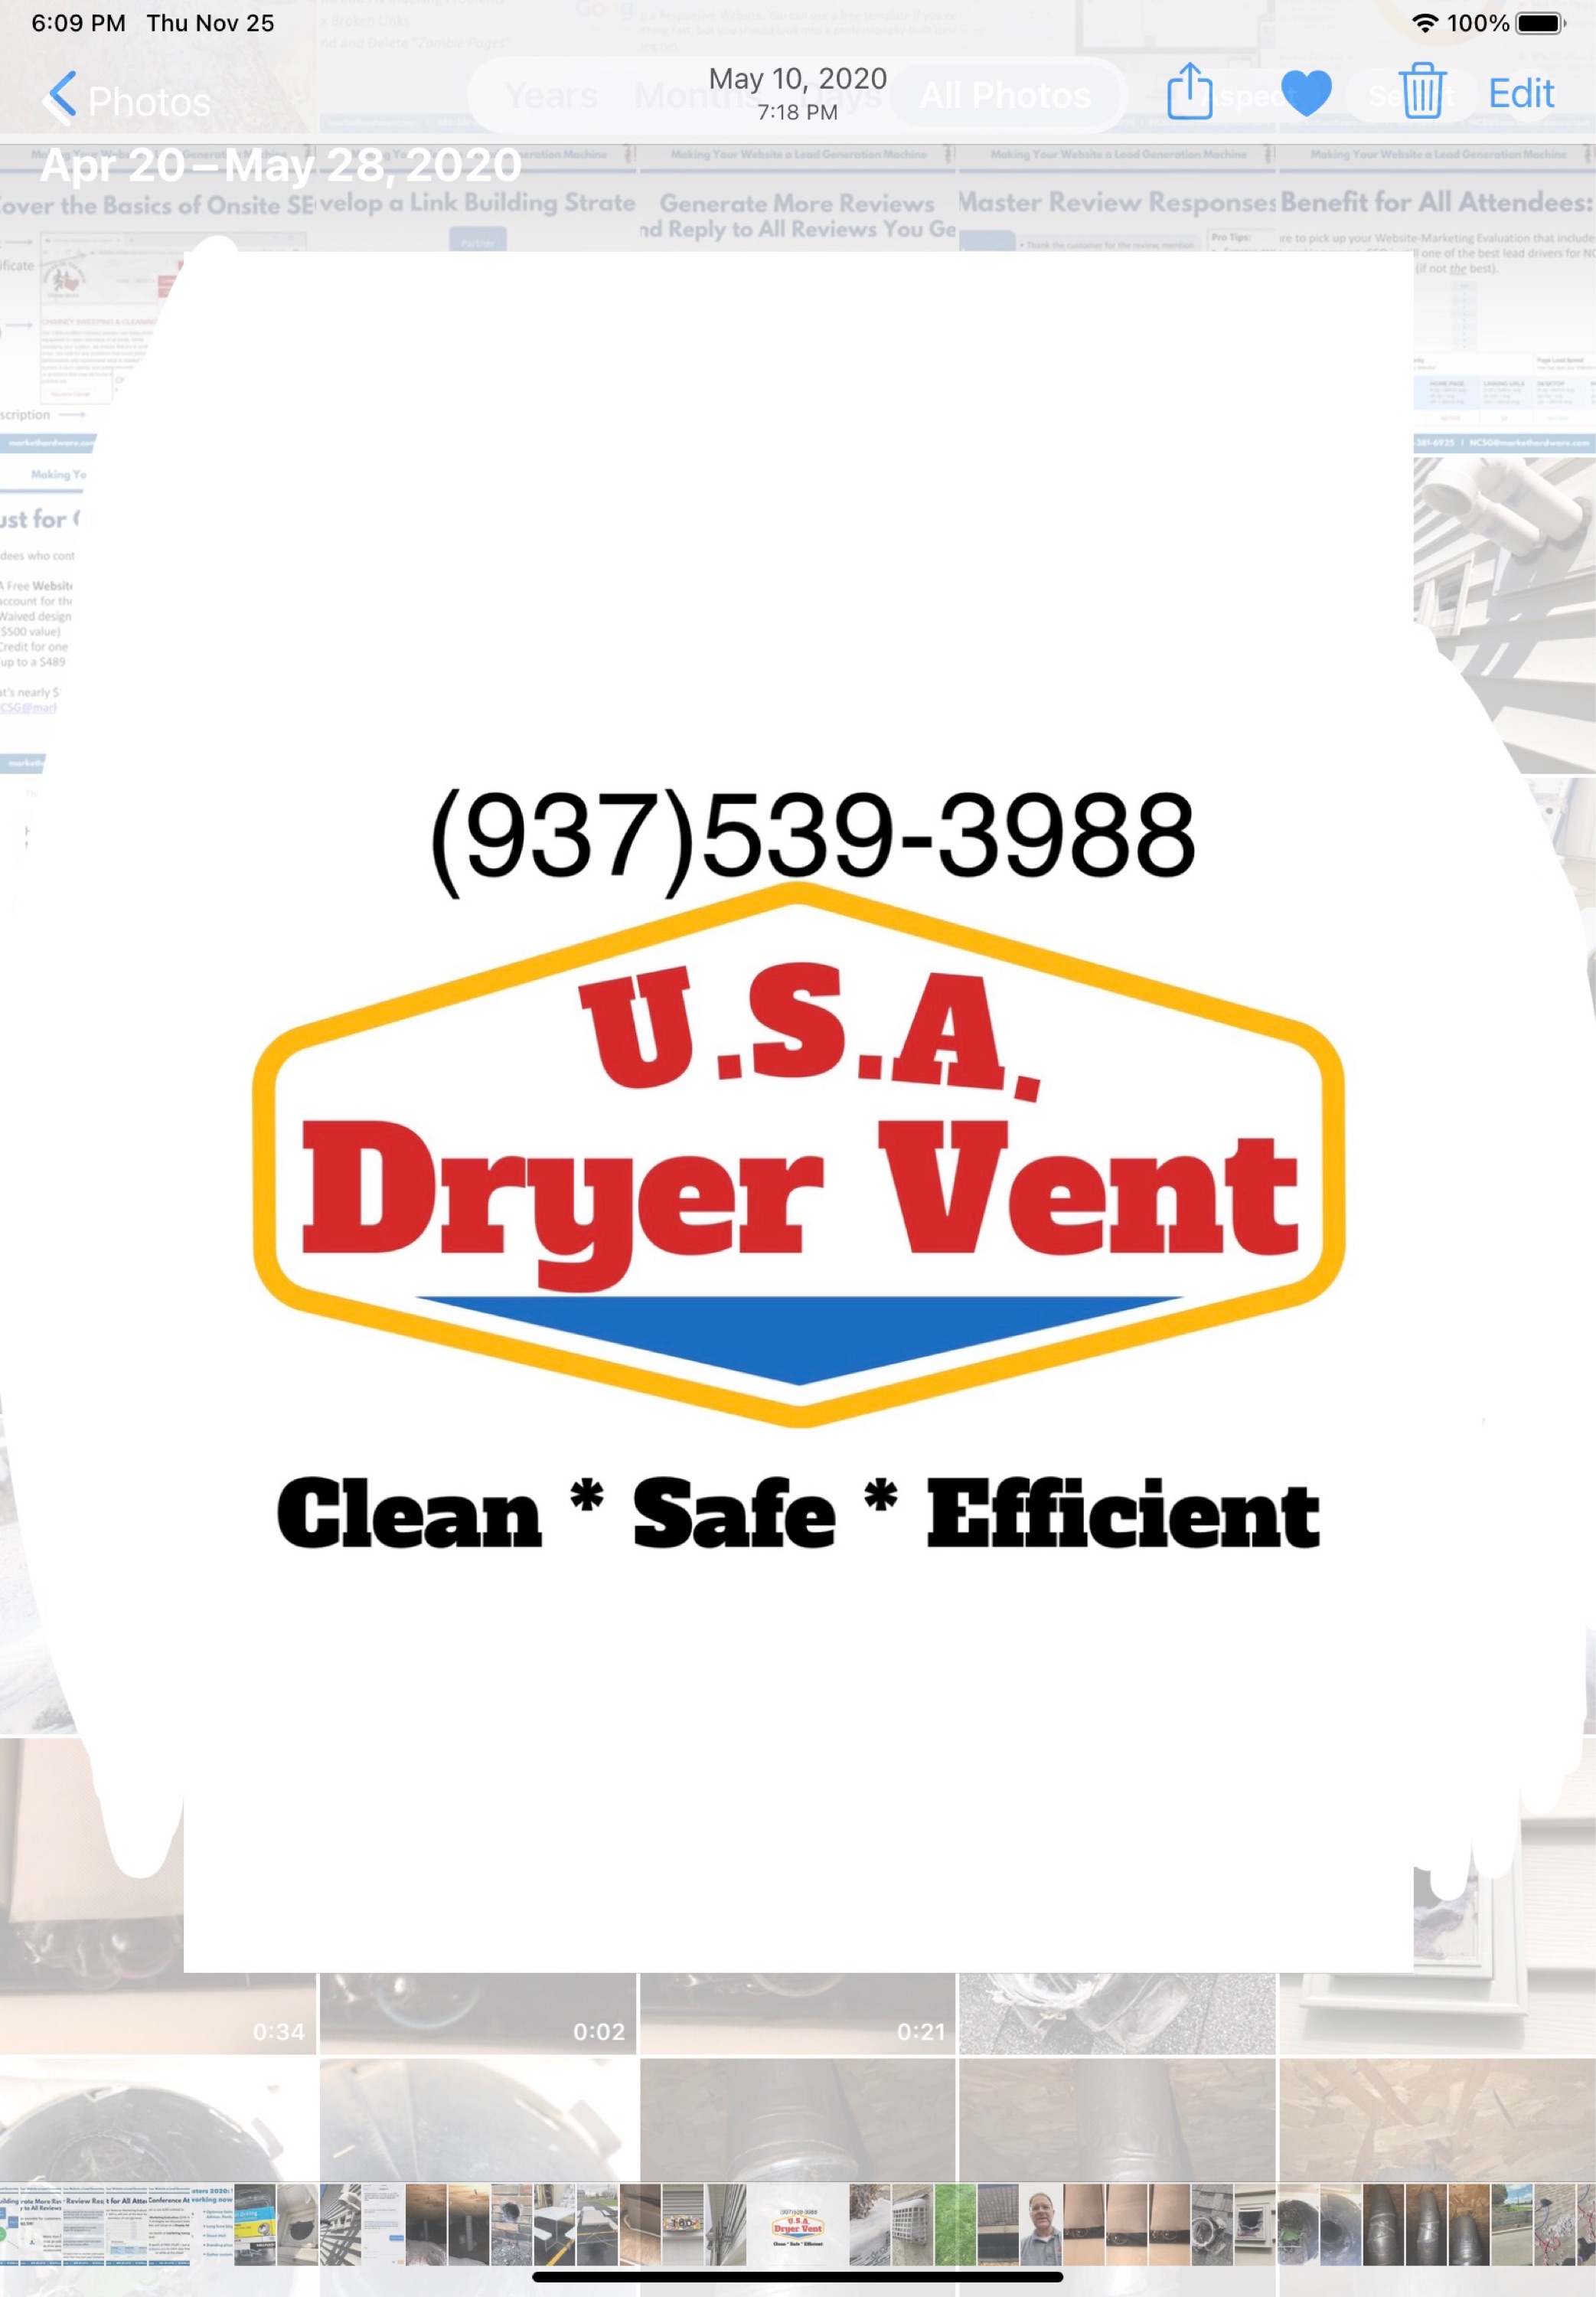 U.S.A. Dryer Vent, LLC Logo